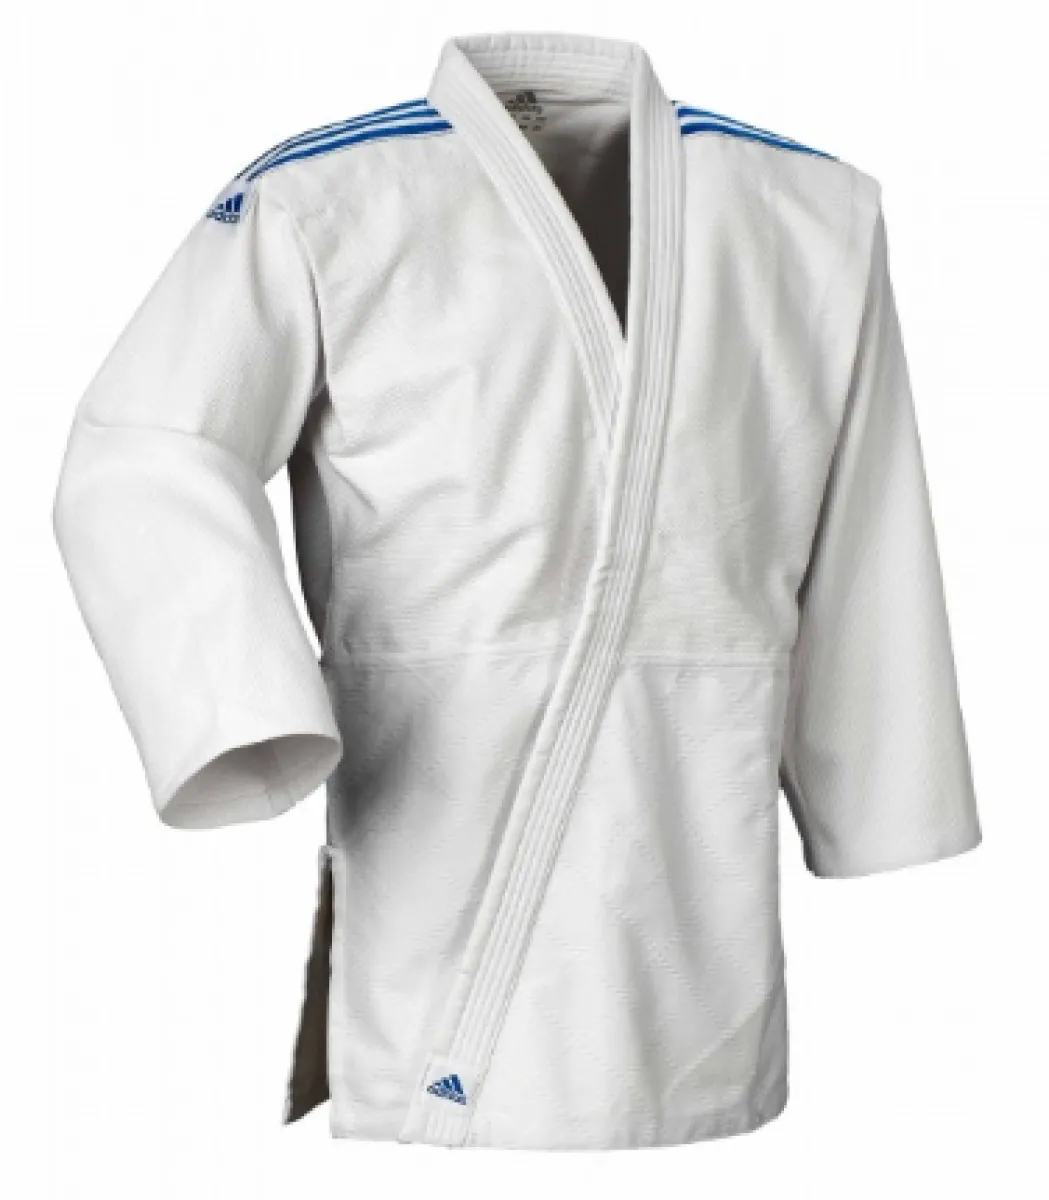 Judo suit Adidas Club J350 white with blue shoulder stripes